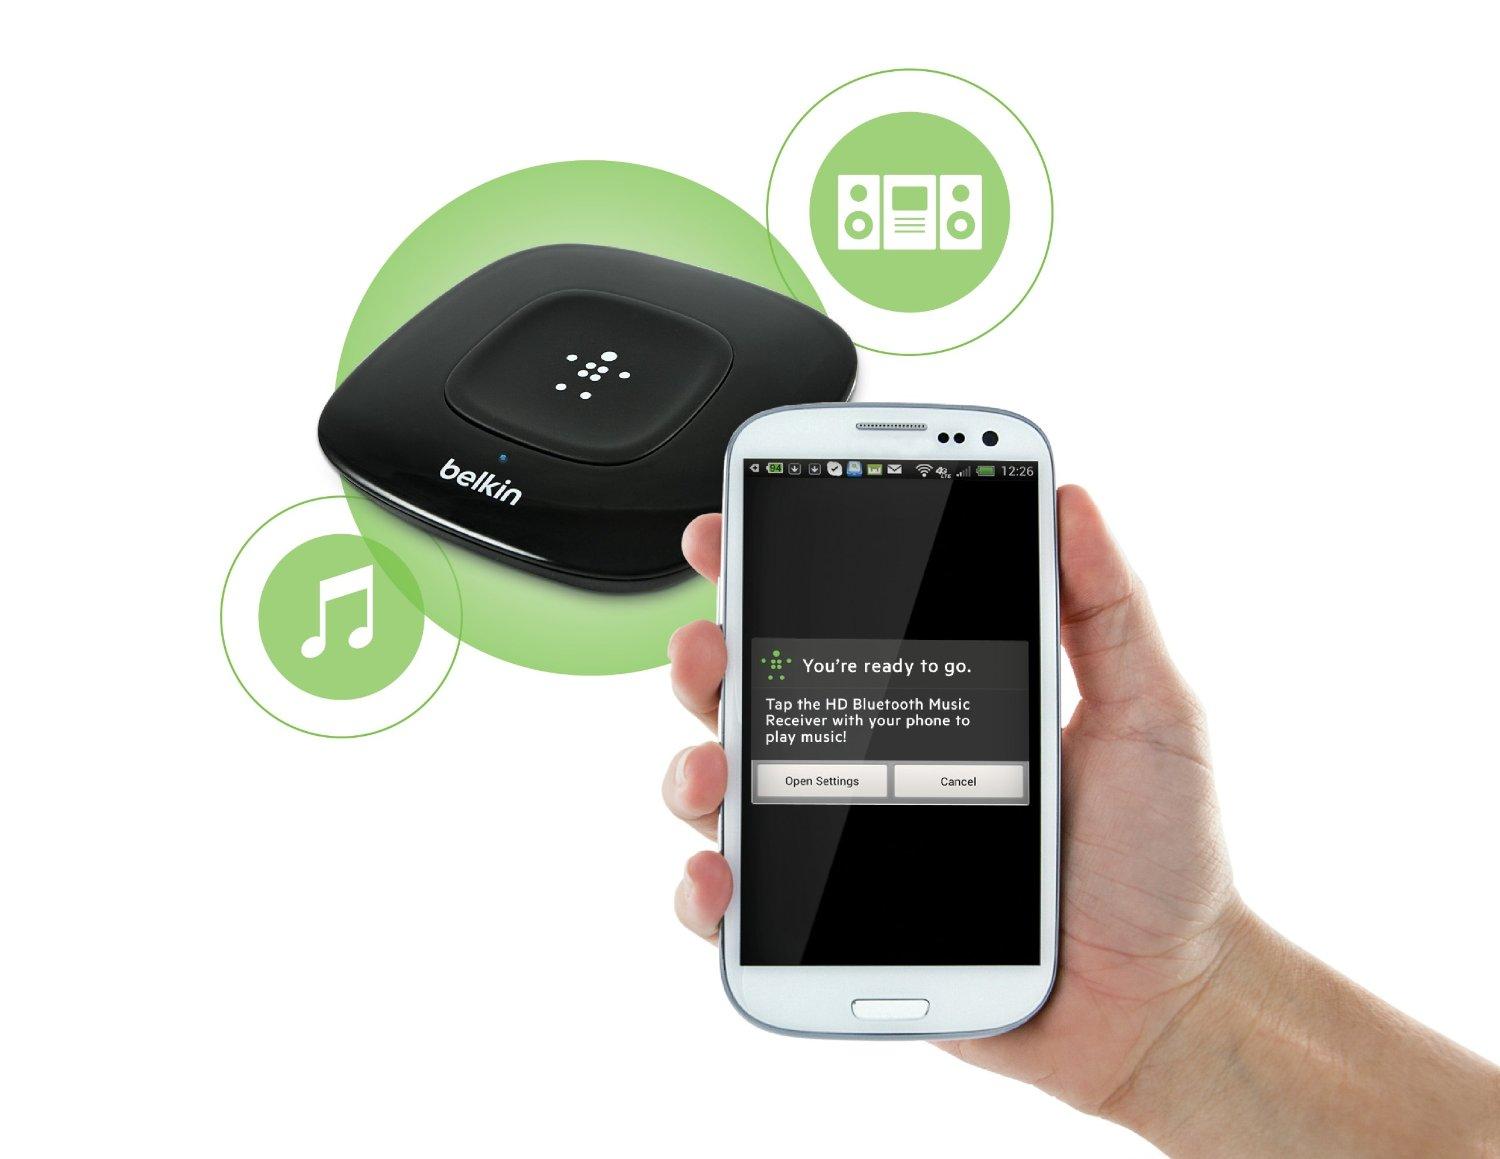 Belkin HD Bluetooth Music Receiver G3A2000